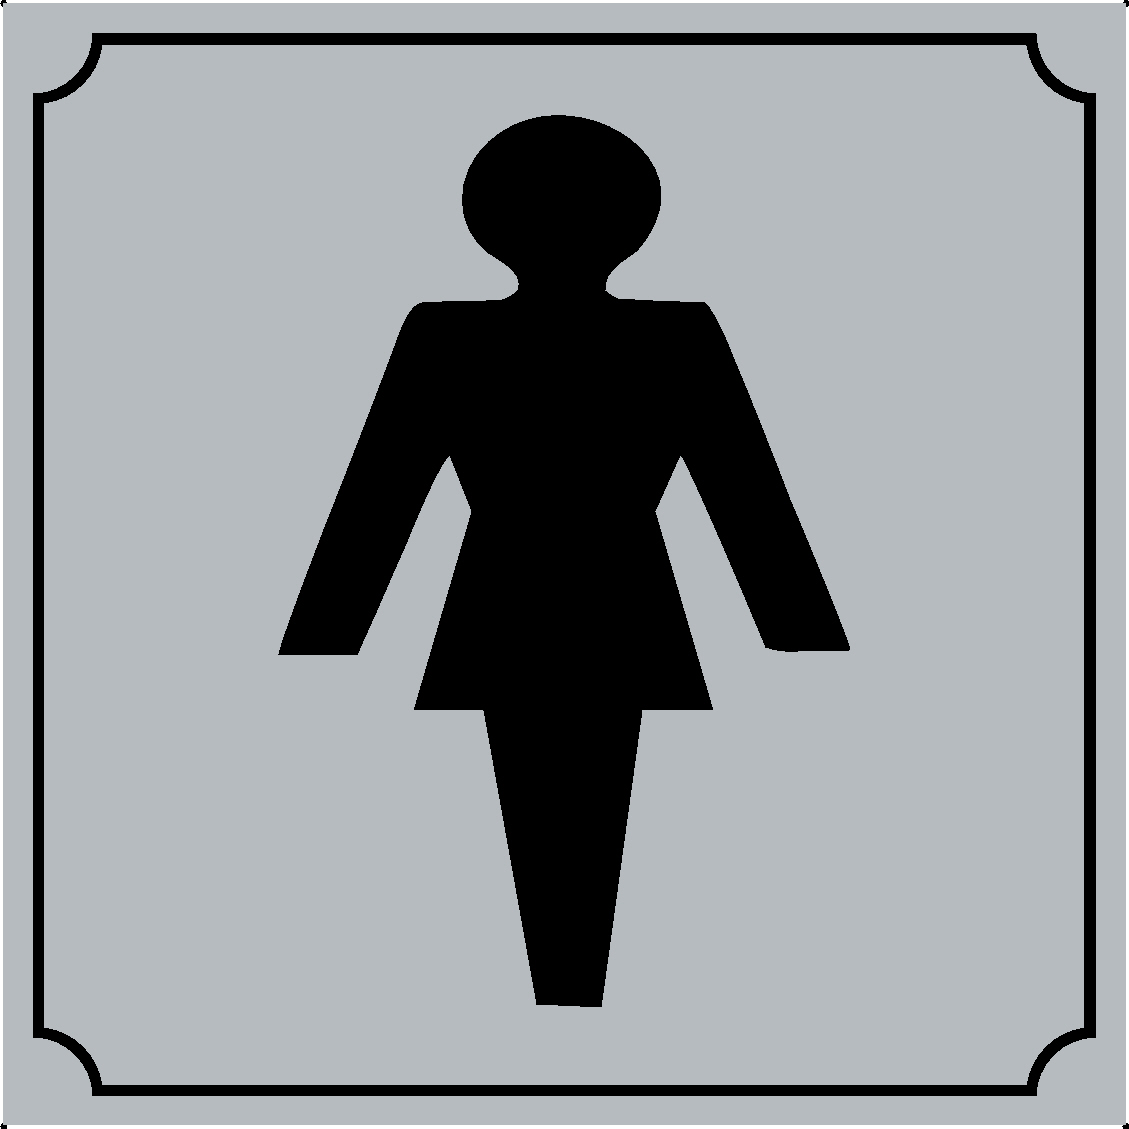 WOMAN (WC) SYMBOL